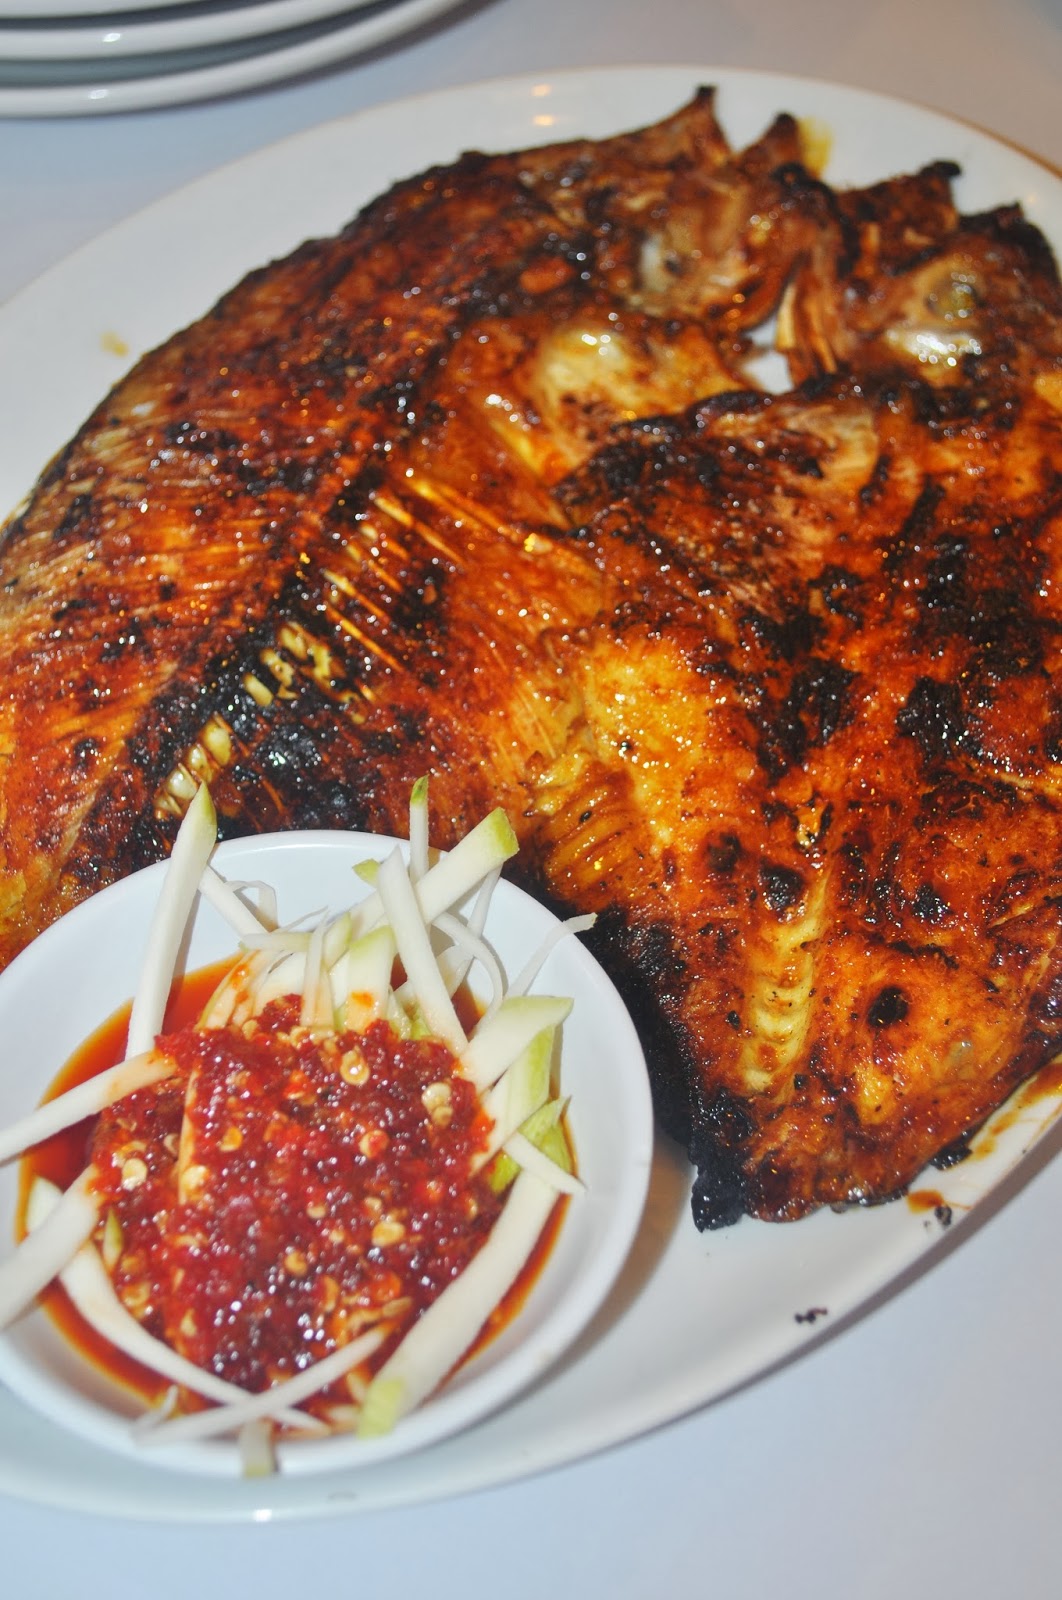 Jess-KITCHEN-Lab: Dinner @ D'COST Seafood Restaurant, Kalibata City